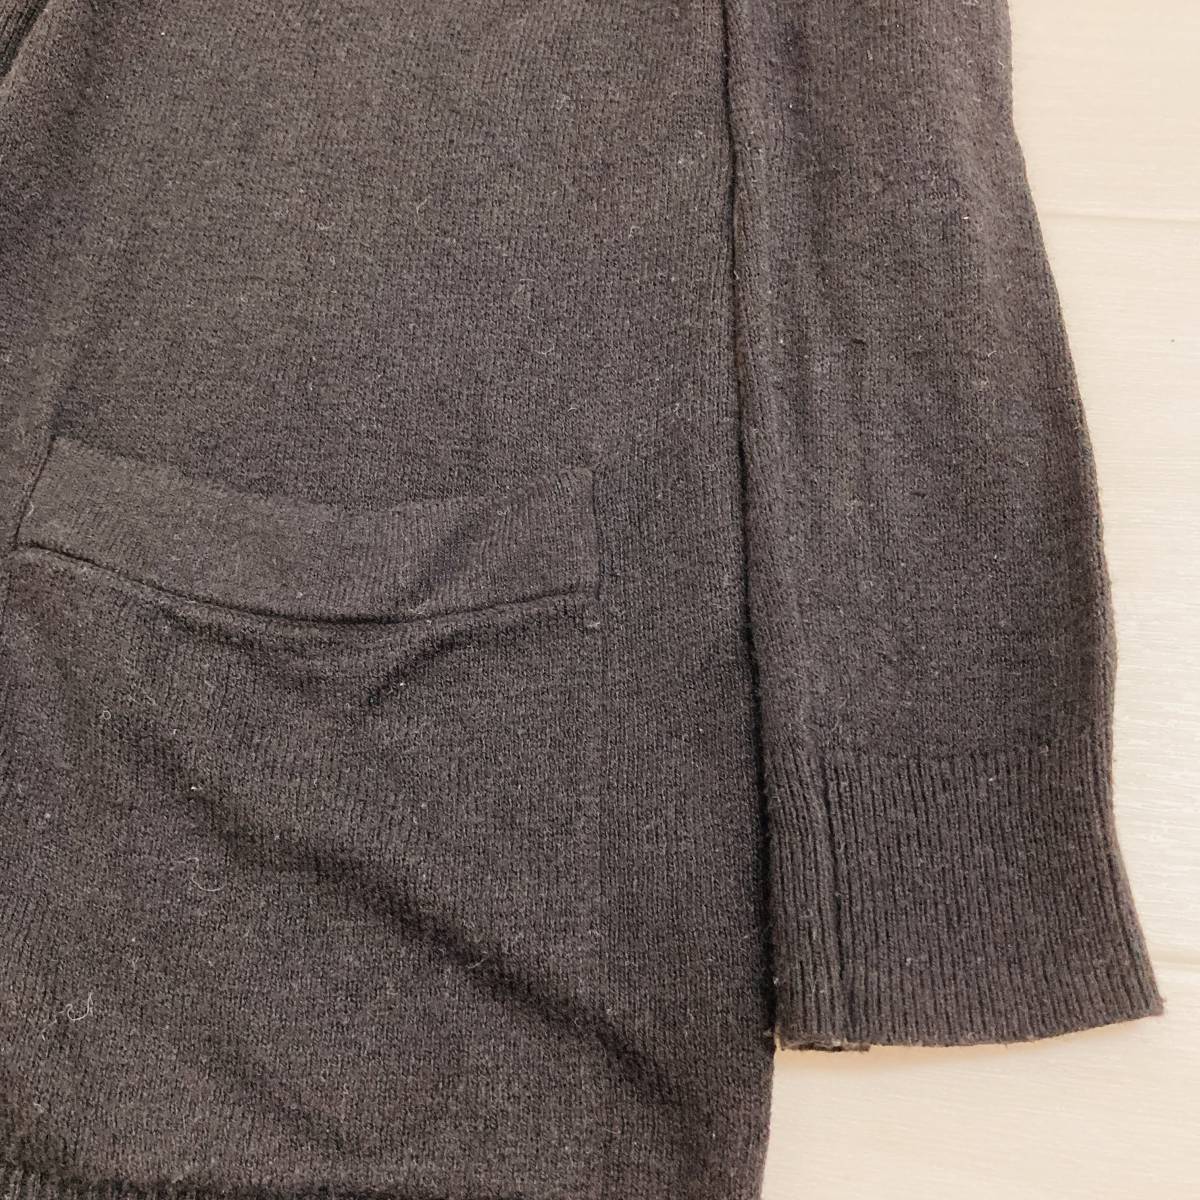 a02712 beautiful goods GAP Gap lady's cardigan long sleeve thin XS black plain cotton . simple all-purpose fine quality Basic casual style 